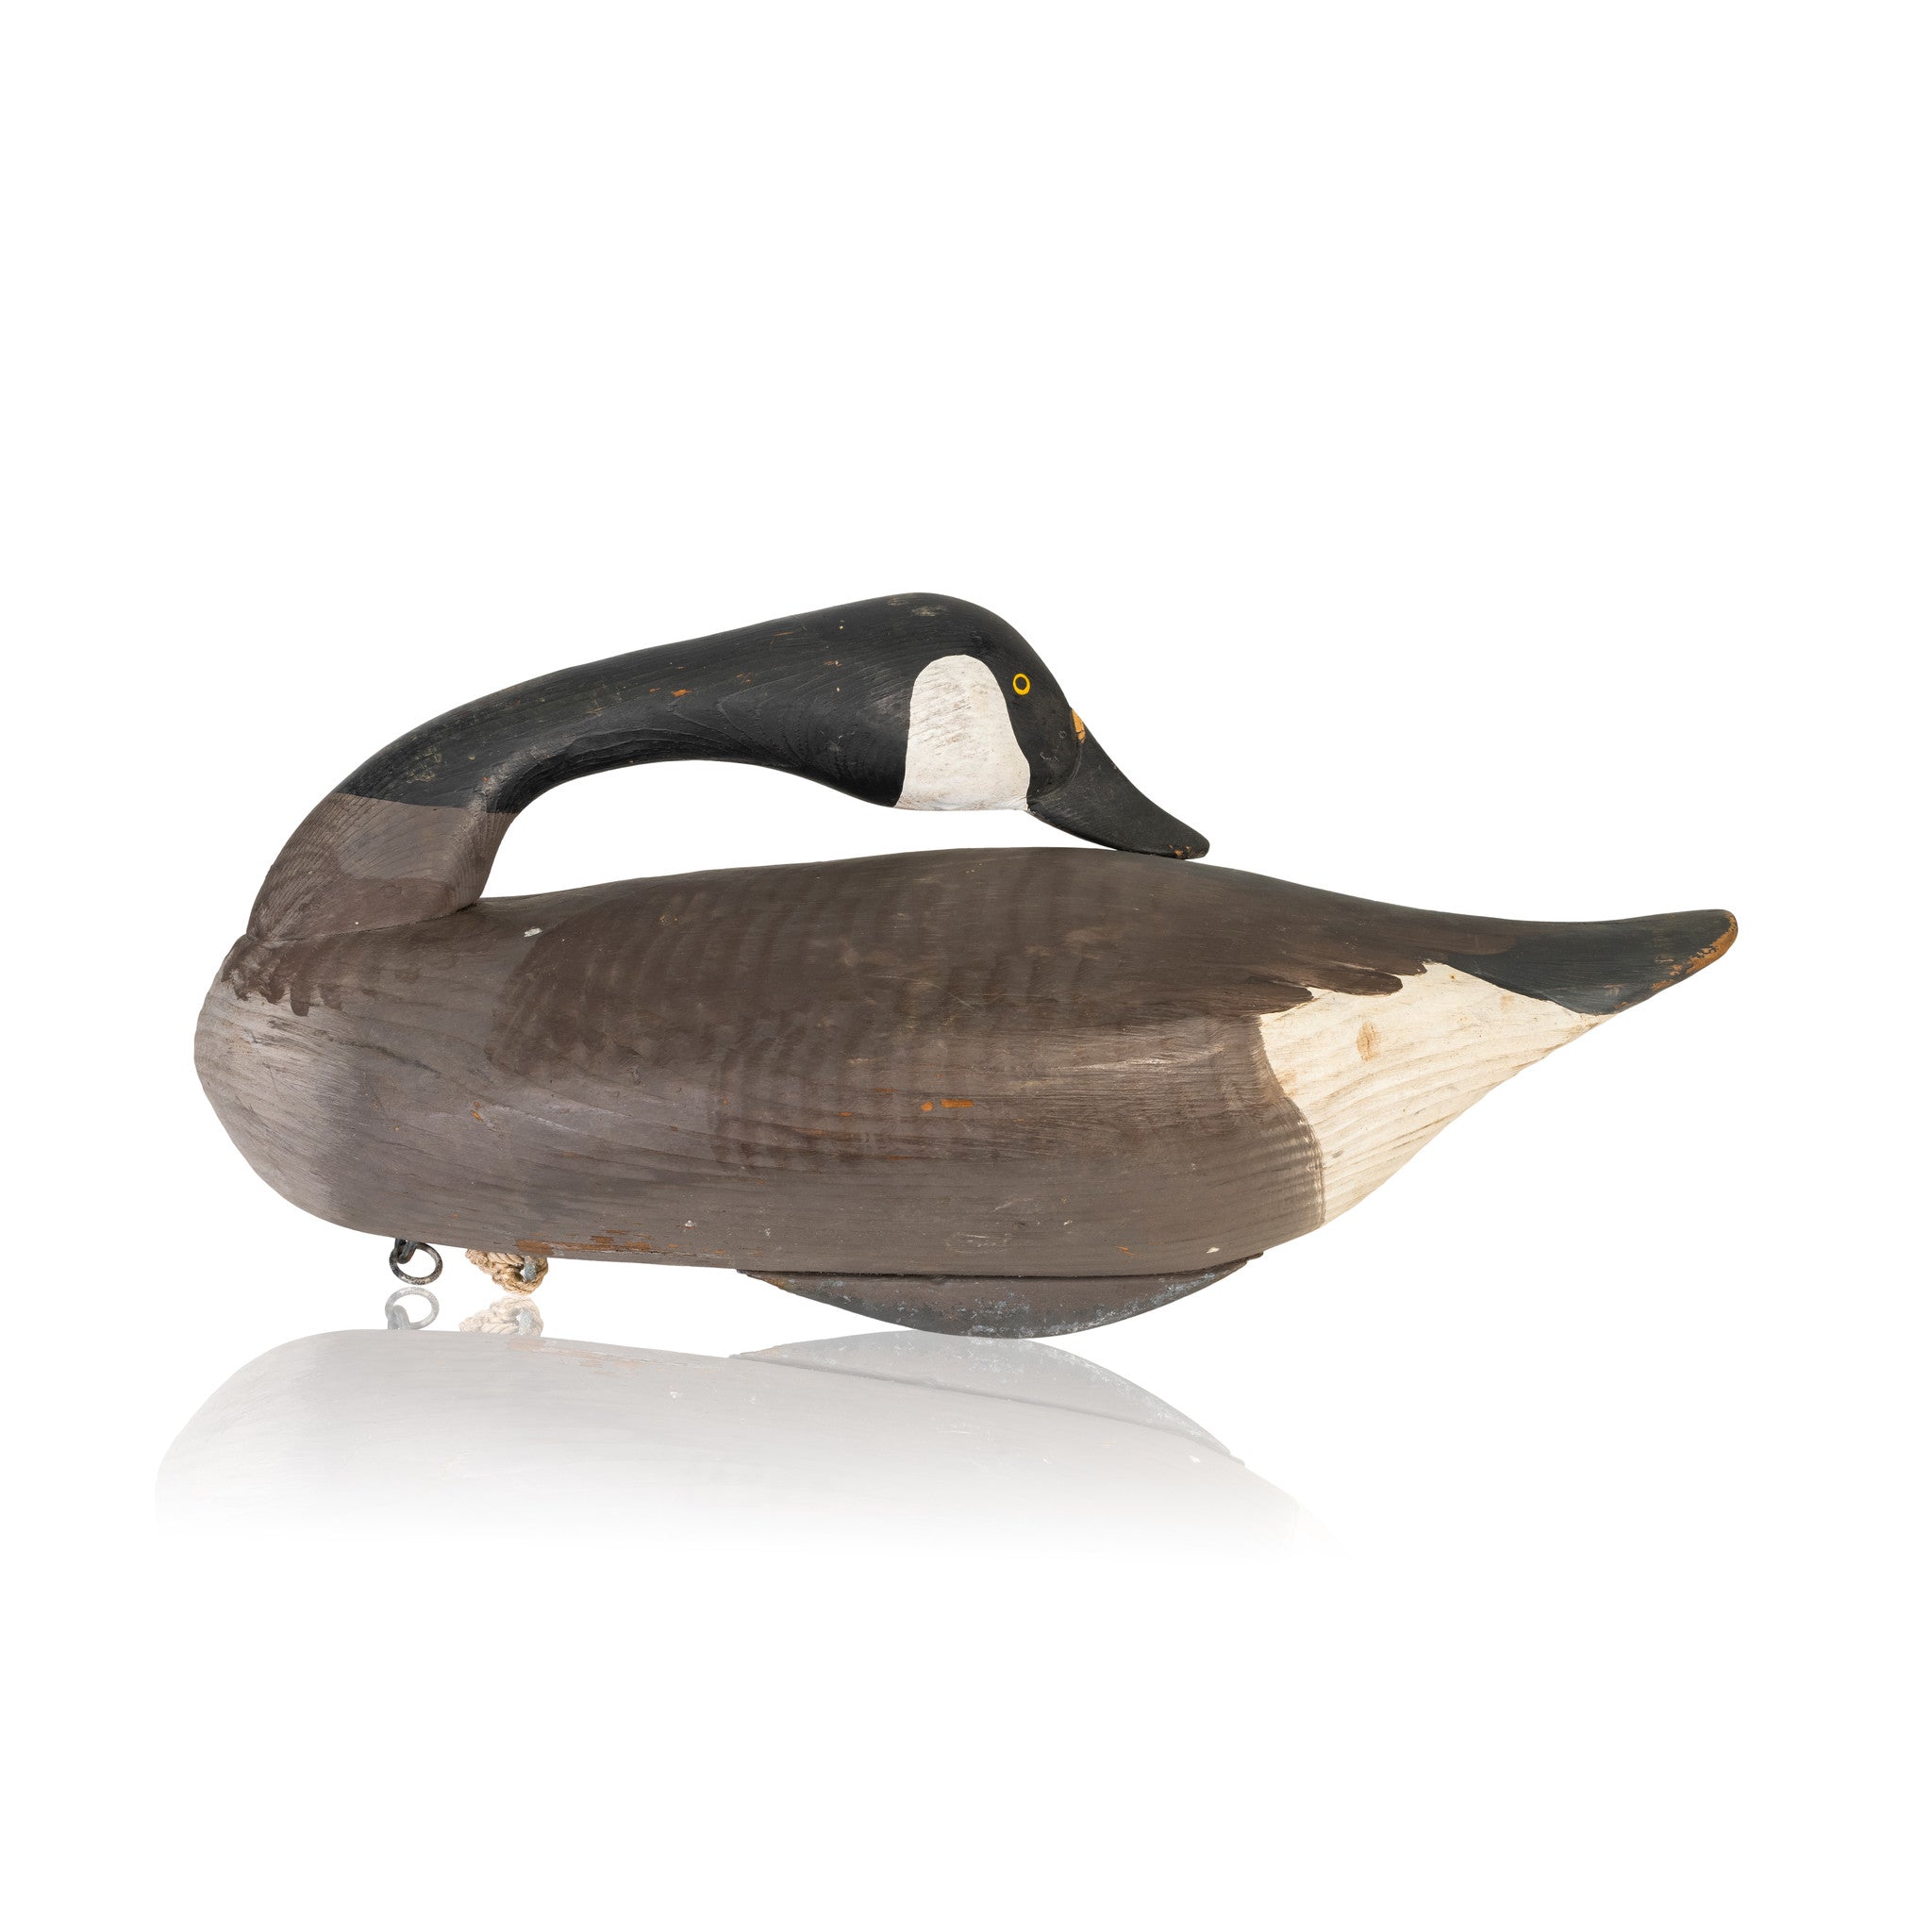 Sleeping Canada Goose Decoy, Sporting Goods, Hunting, Waterfowl Decoy